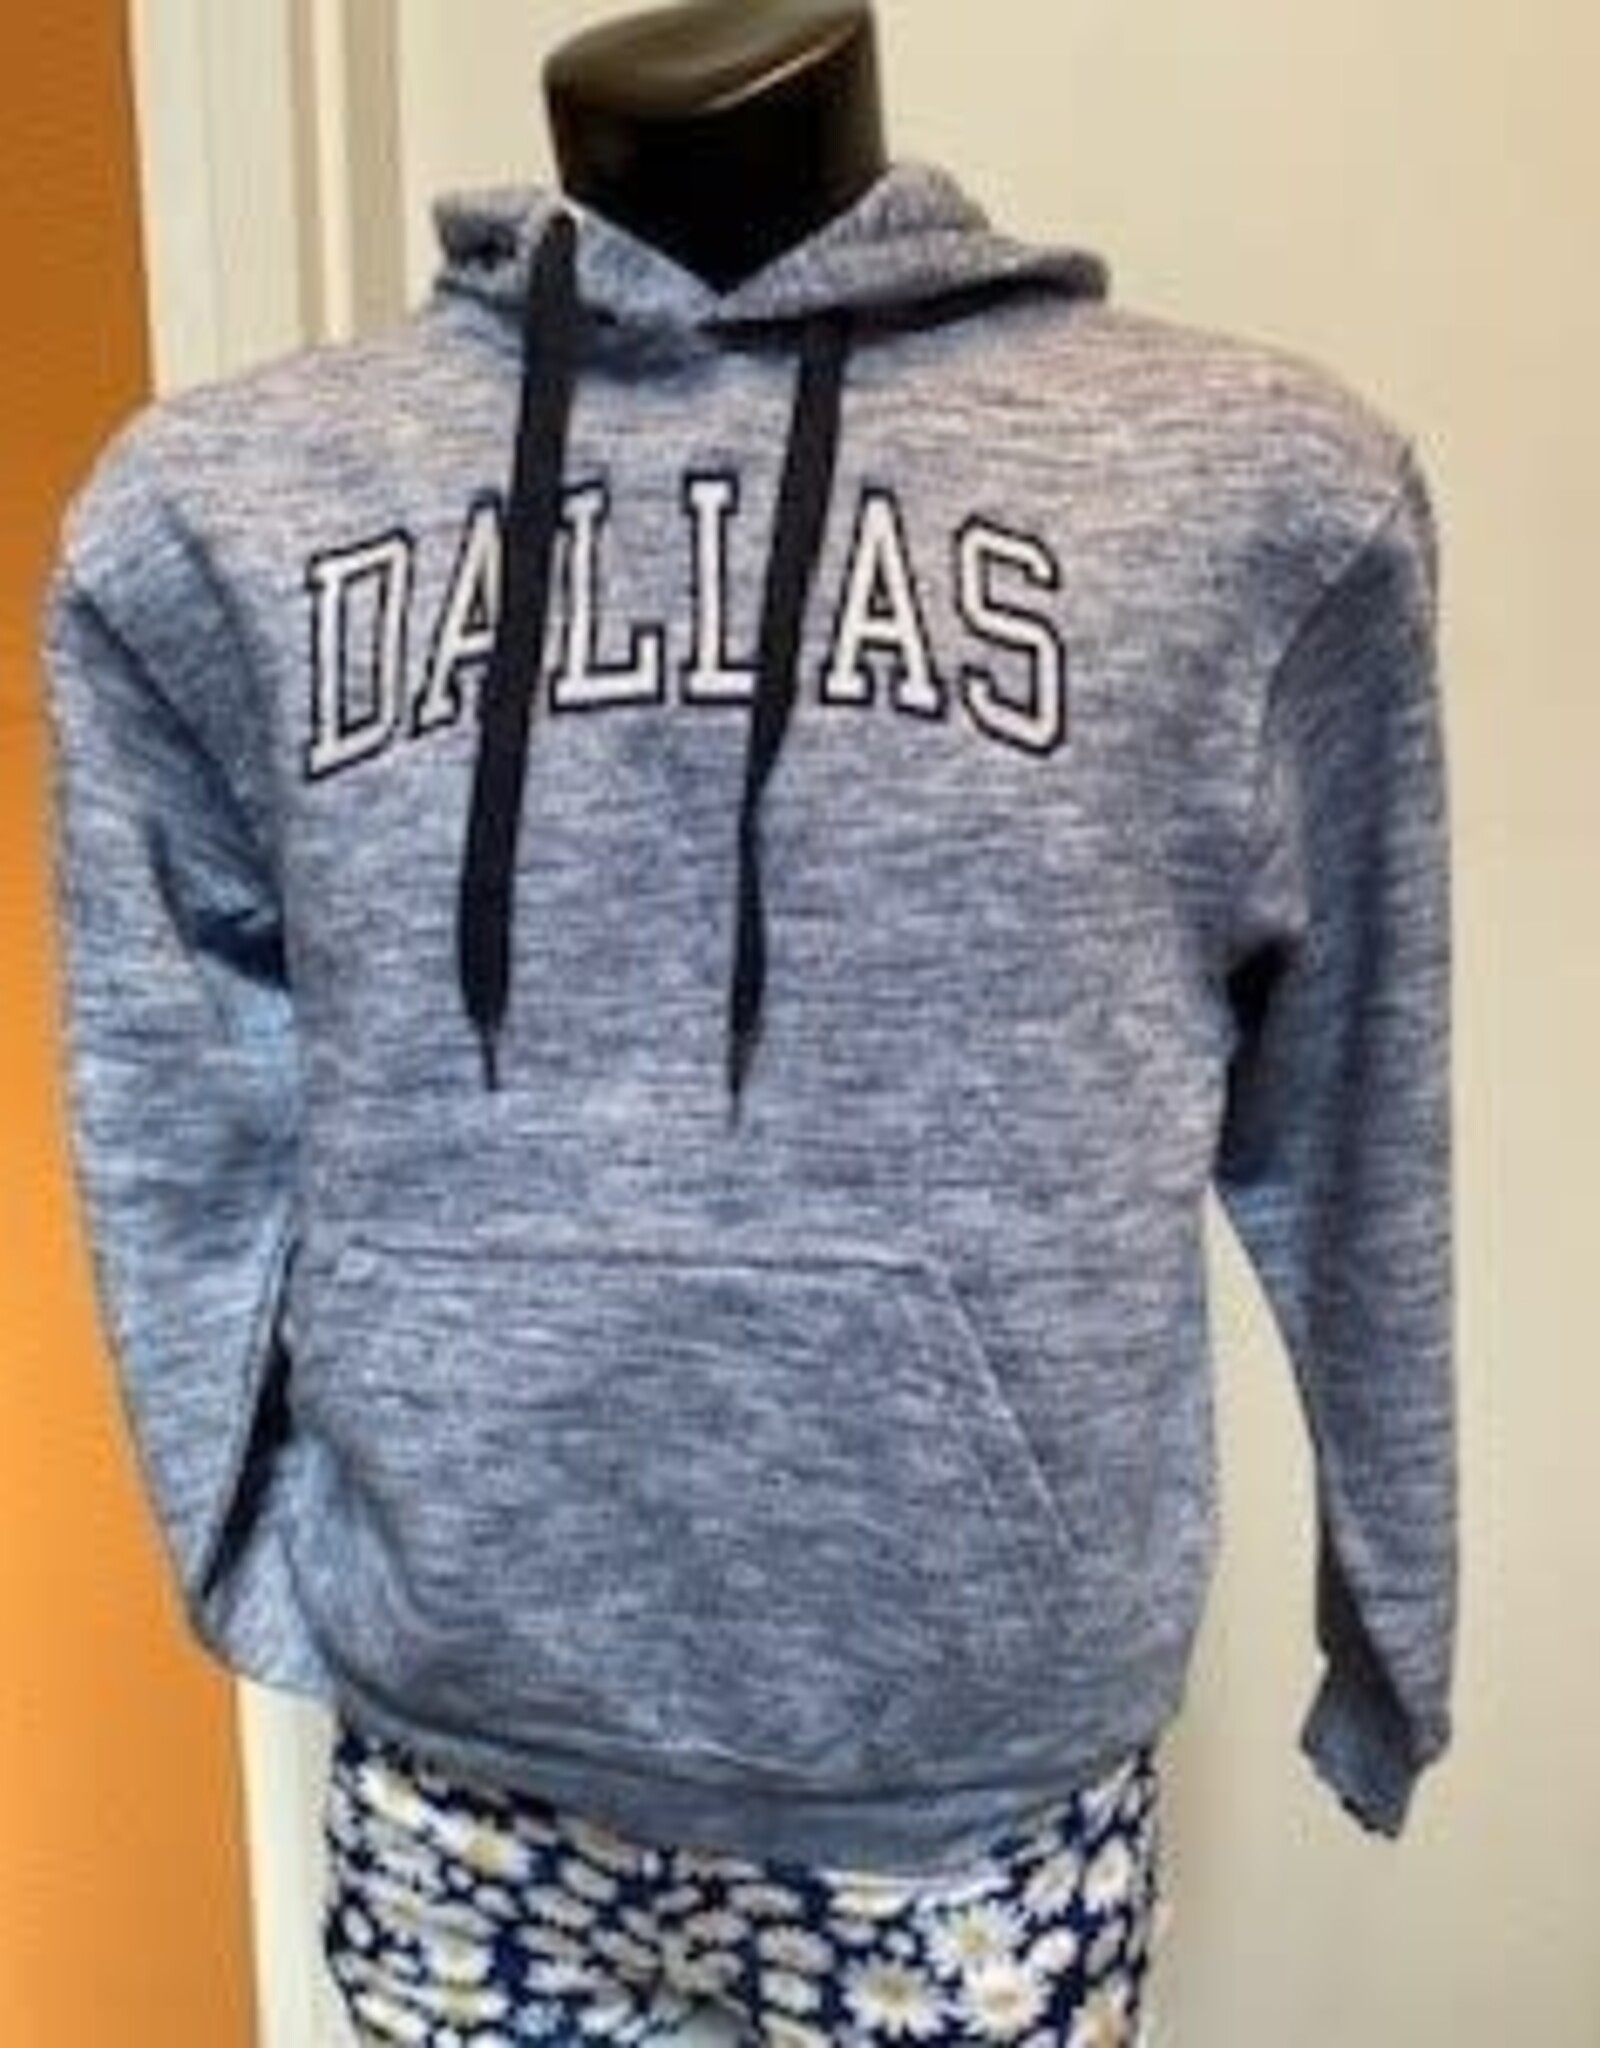 Exist Sports Hooded Sweatshirt-Dallas